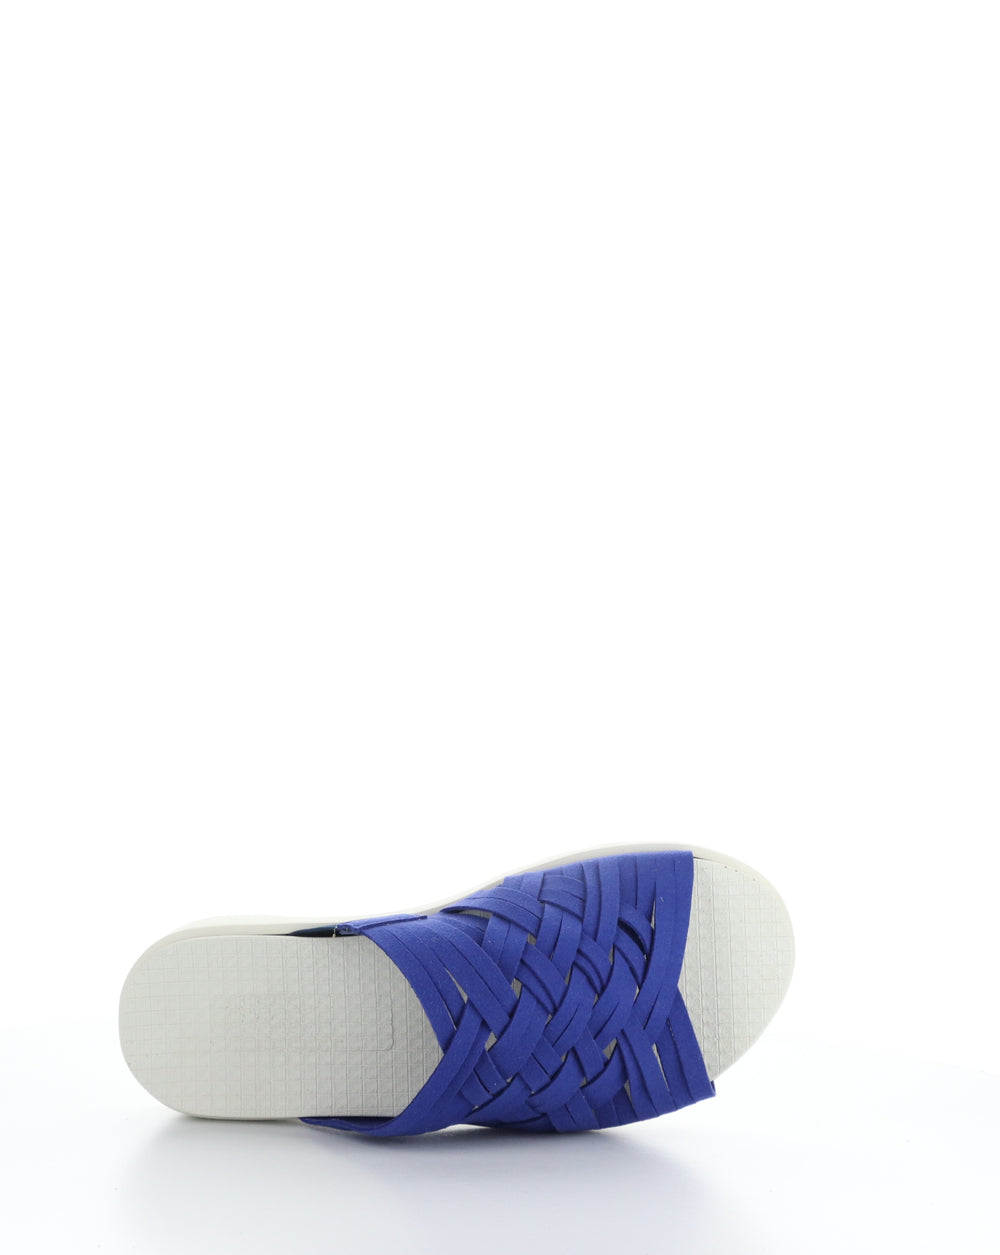 RISED BLUE Slip-on Sandals